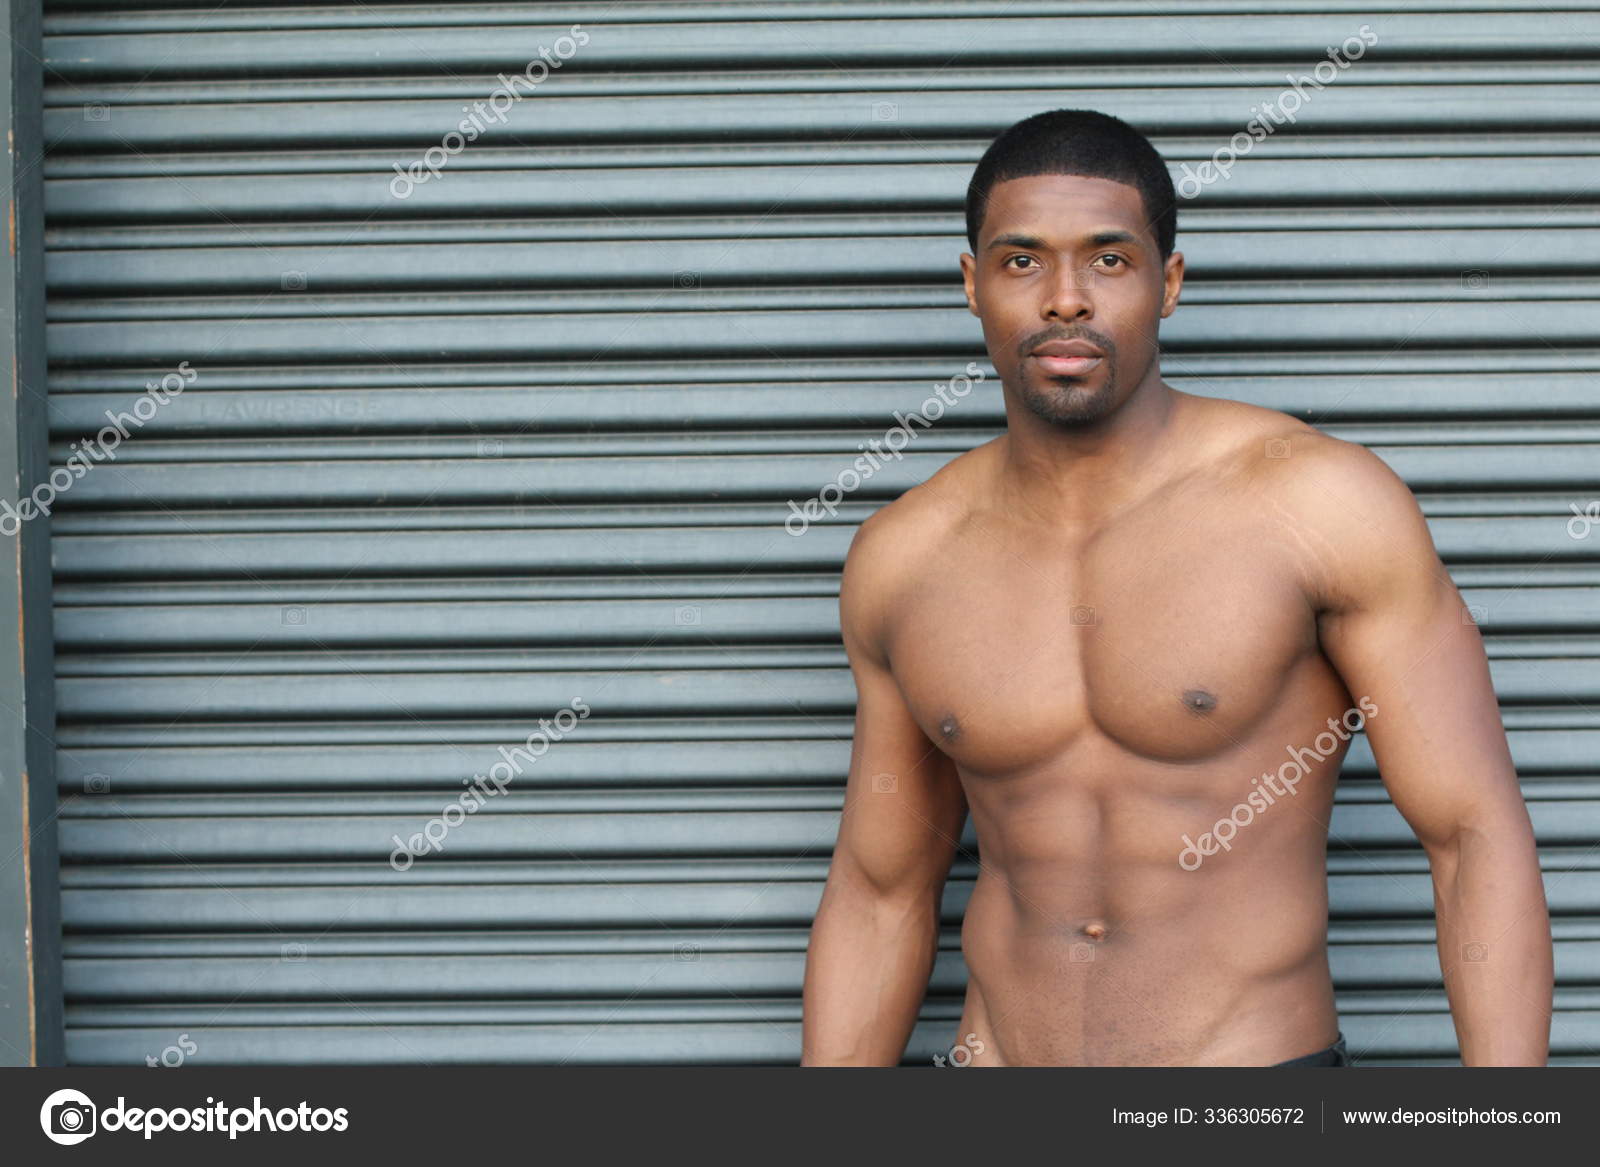 Bare All: Stunning Africa Men Pose Nude